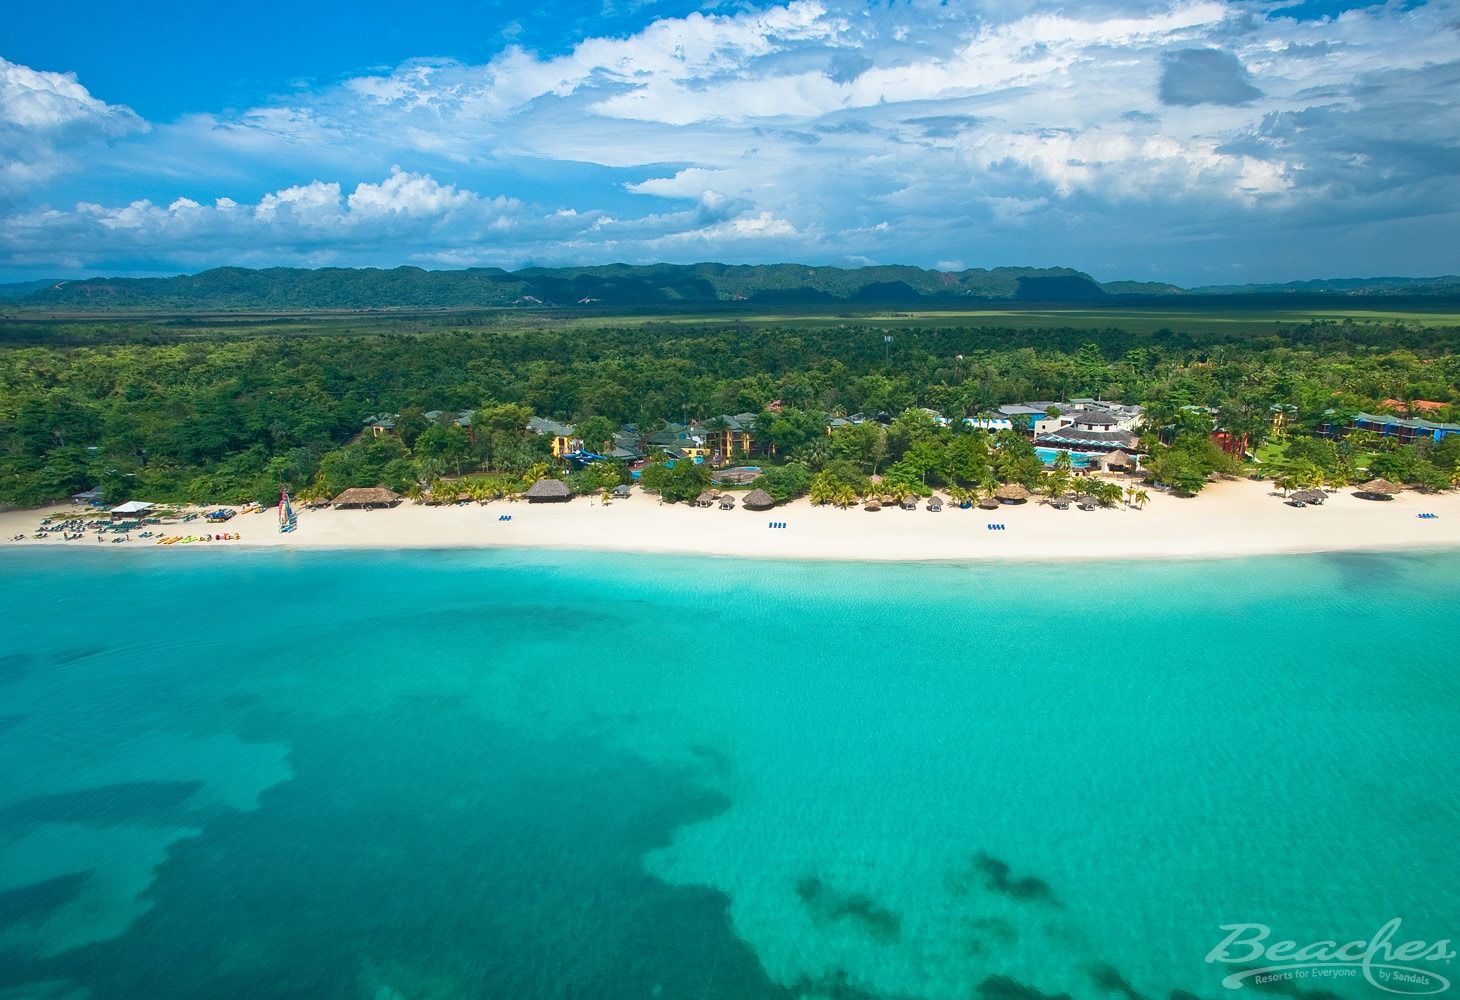 Take Your “Travel Pod” to Beaches Resorts!